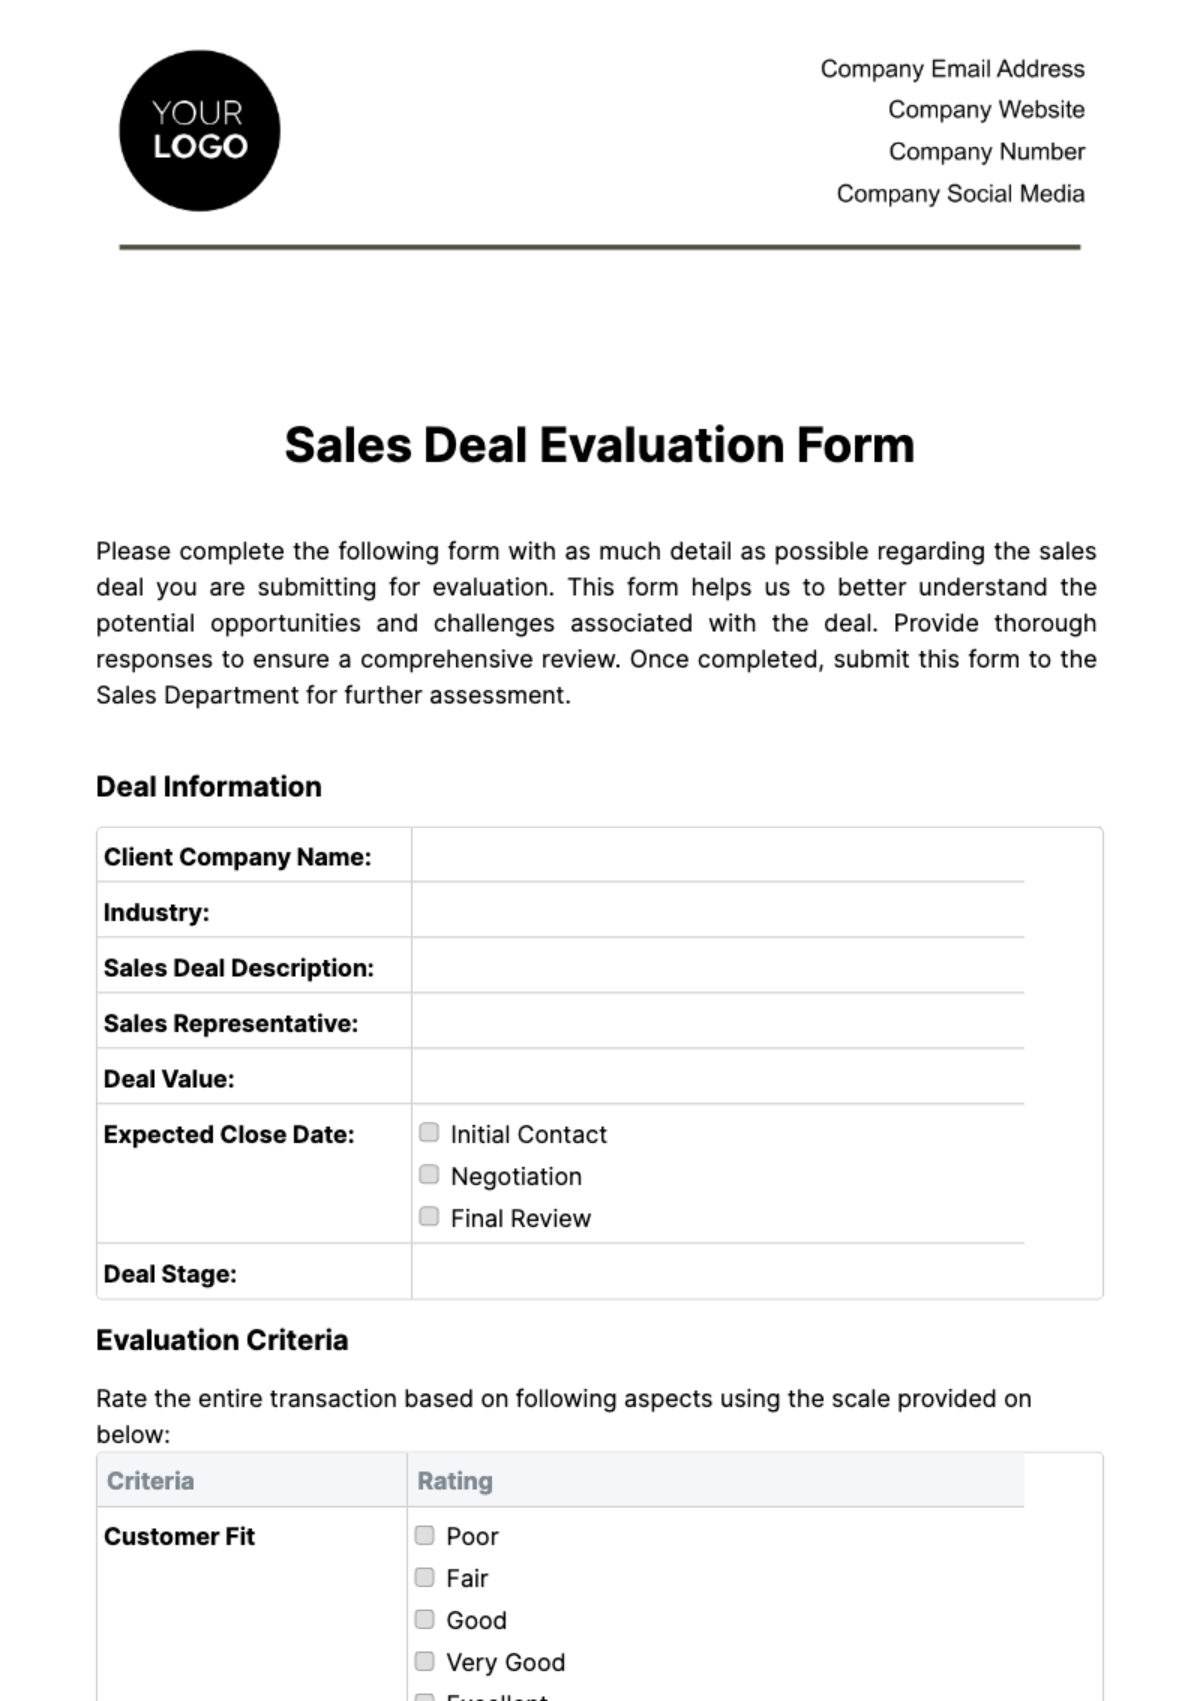 Sales Deal Evaluation Form Template